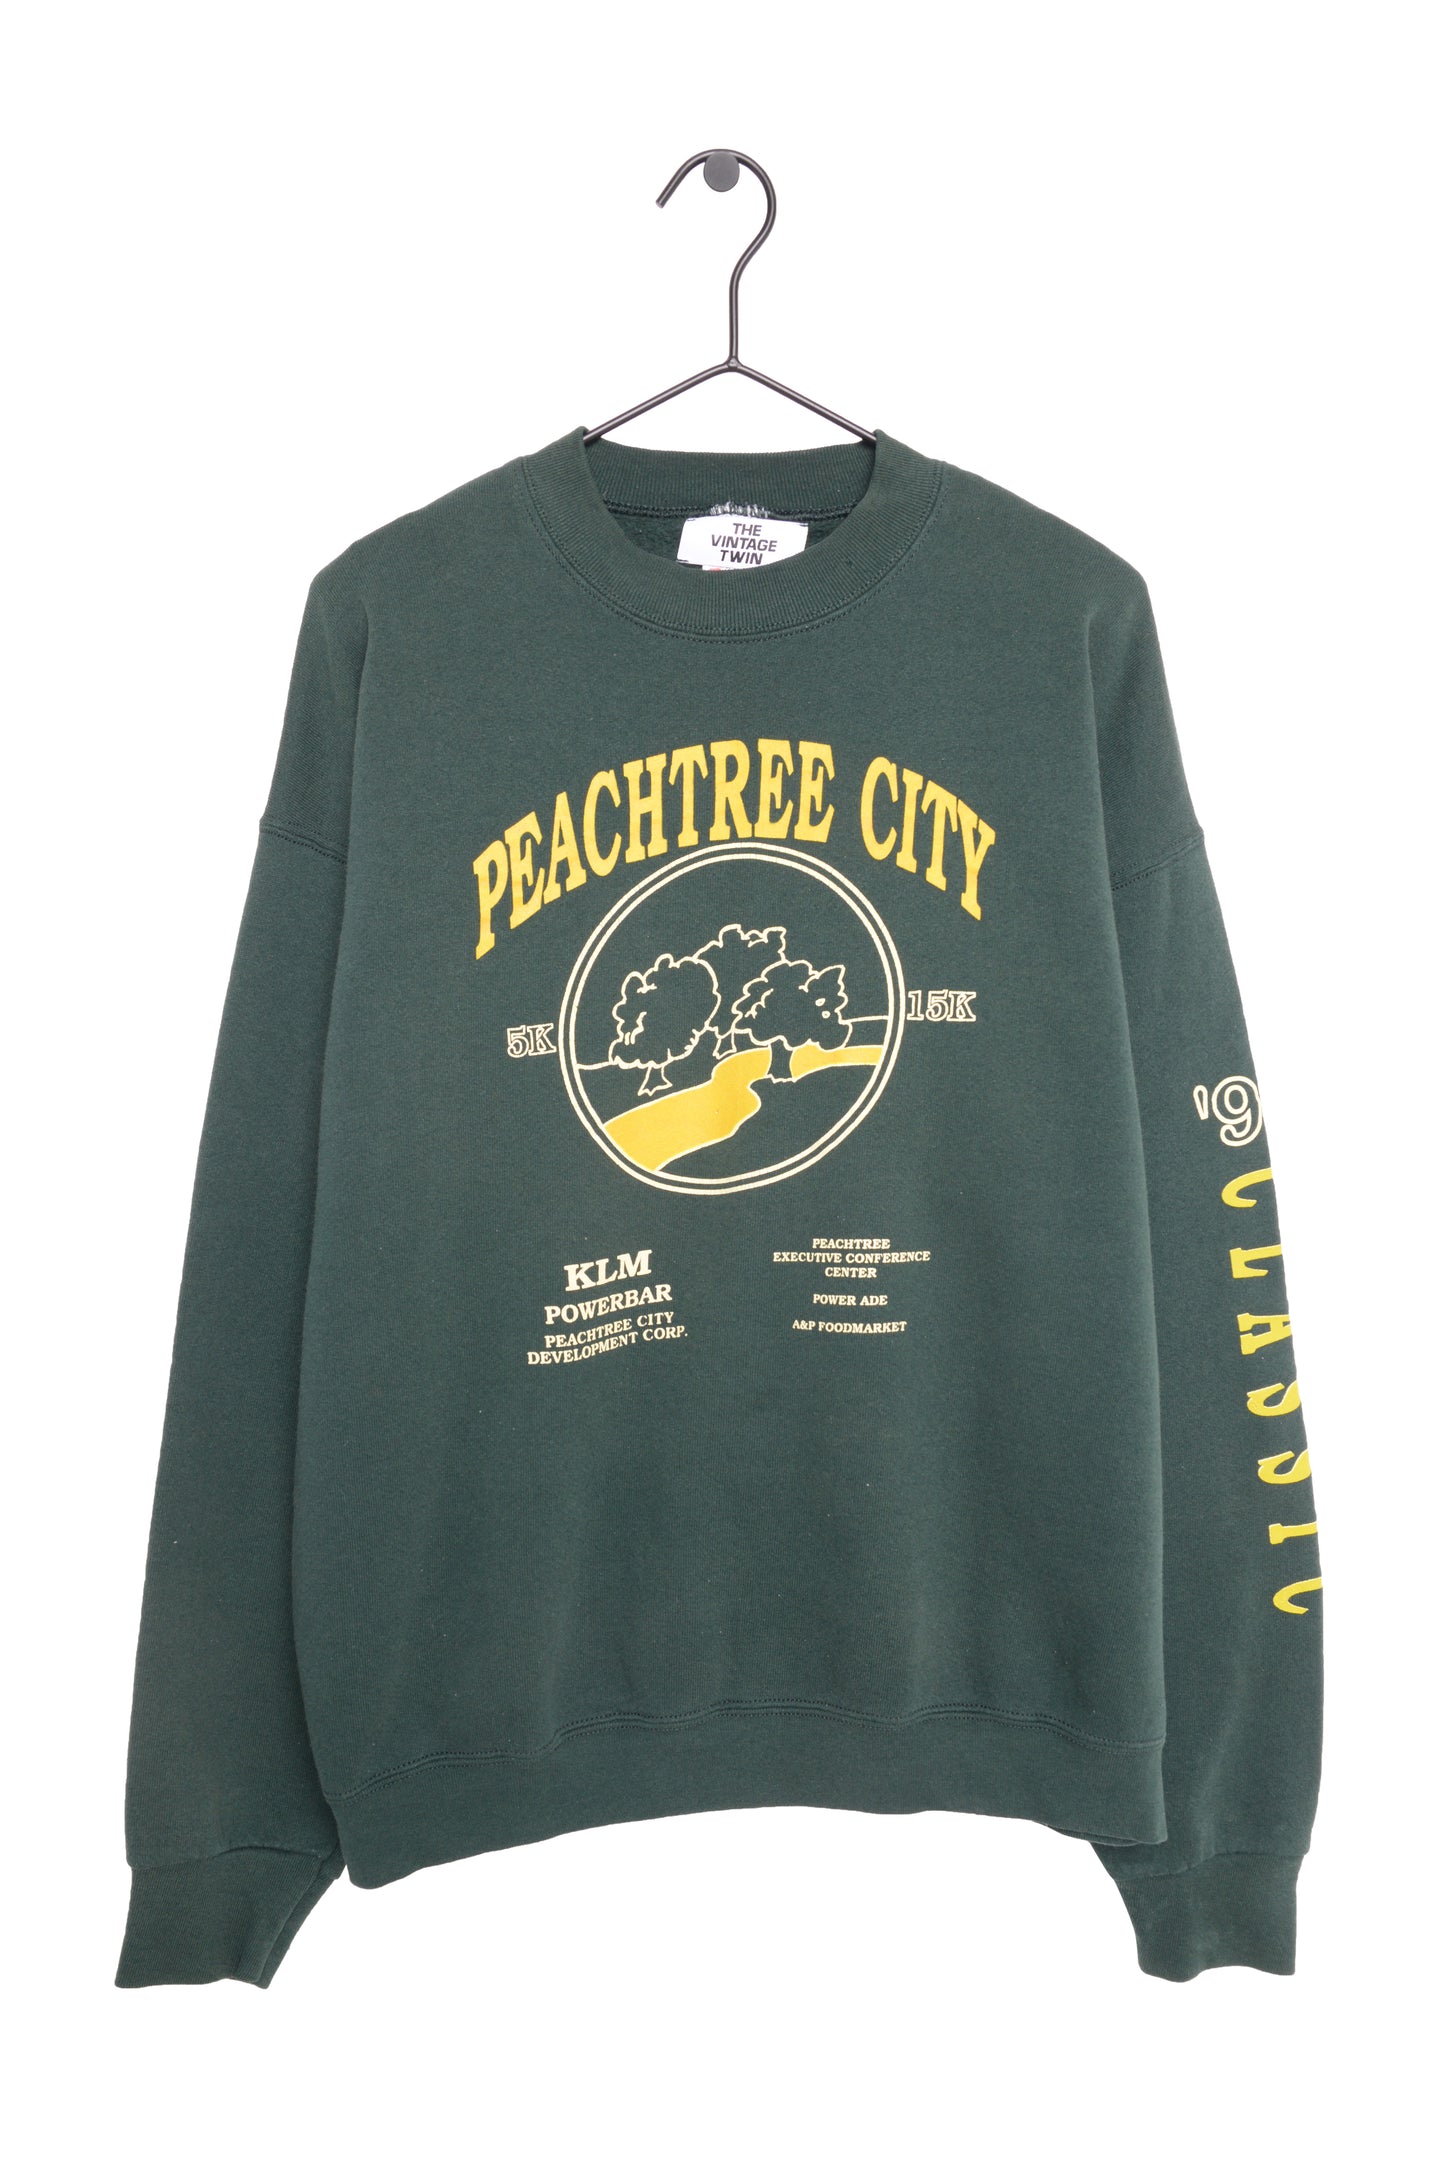 1994 Peachtree City 15K Sweatshirt USA